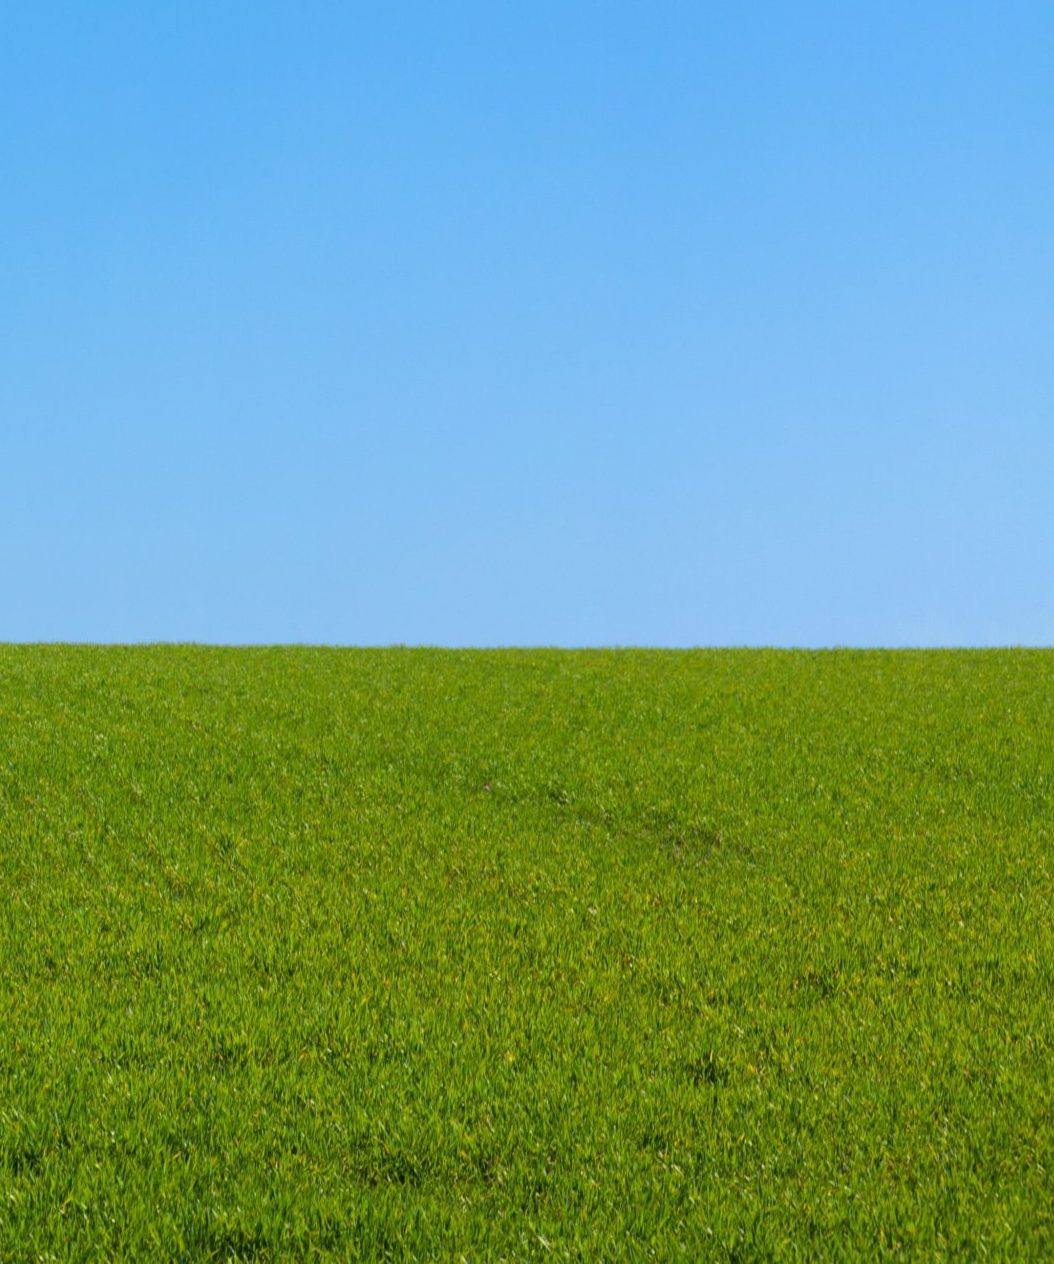 Turfgrass grows under a blue sky 